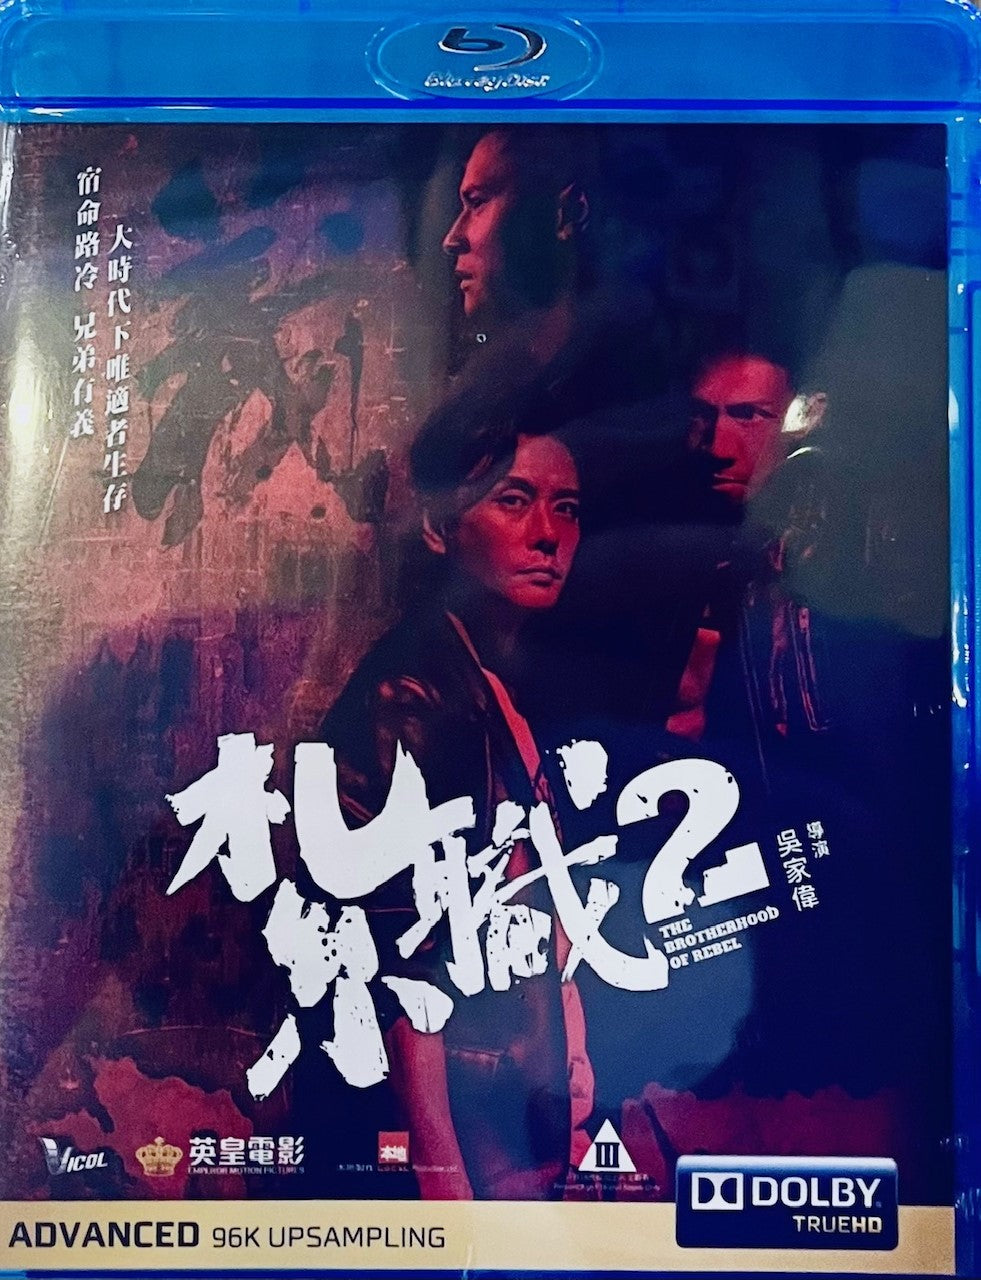 The Brotherhood of Rebel 紮職2  2023 (Hong Kong Movie) BLU-RAY with English Sub (Region A)